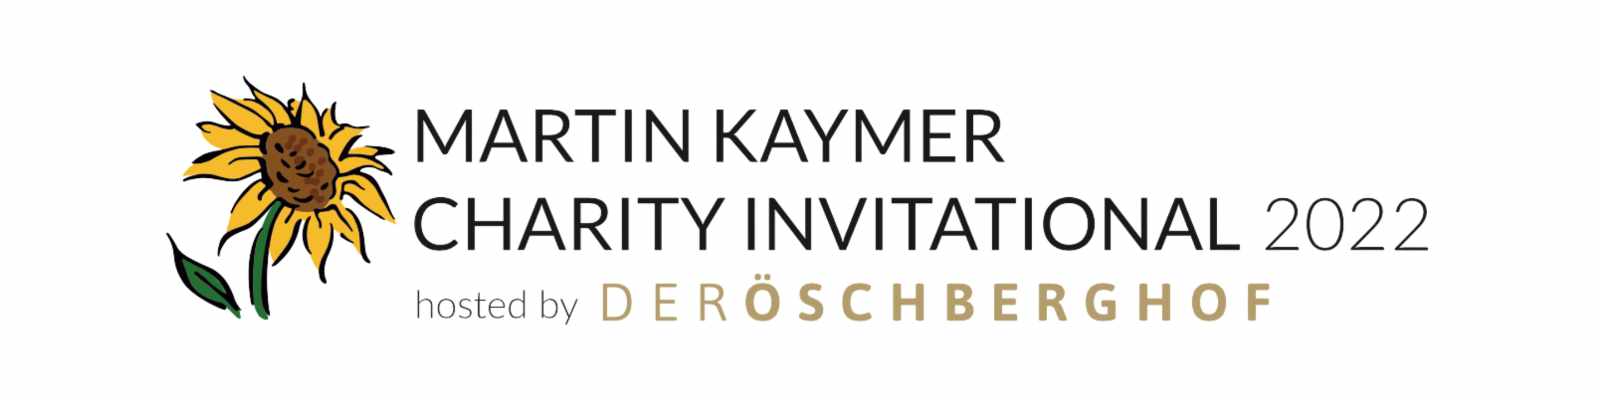 Das Logo des Martin Kaymer Charity Invitational 2022 (photo by Martin Kaymer Helianthus Stiftung)